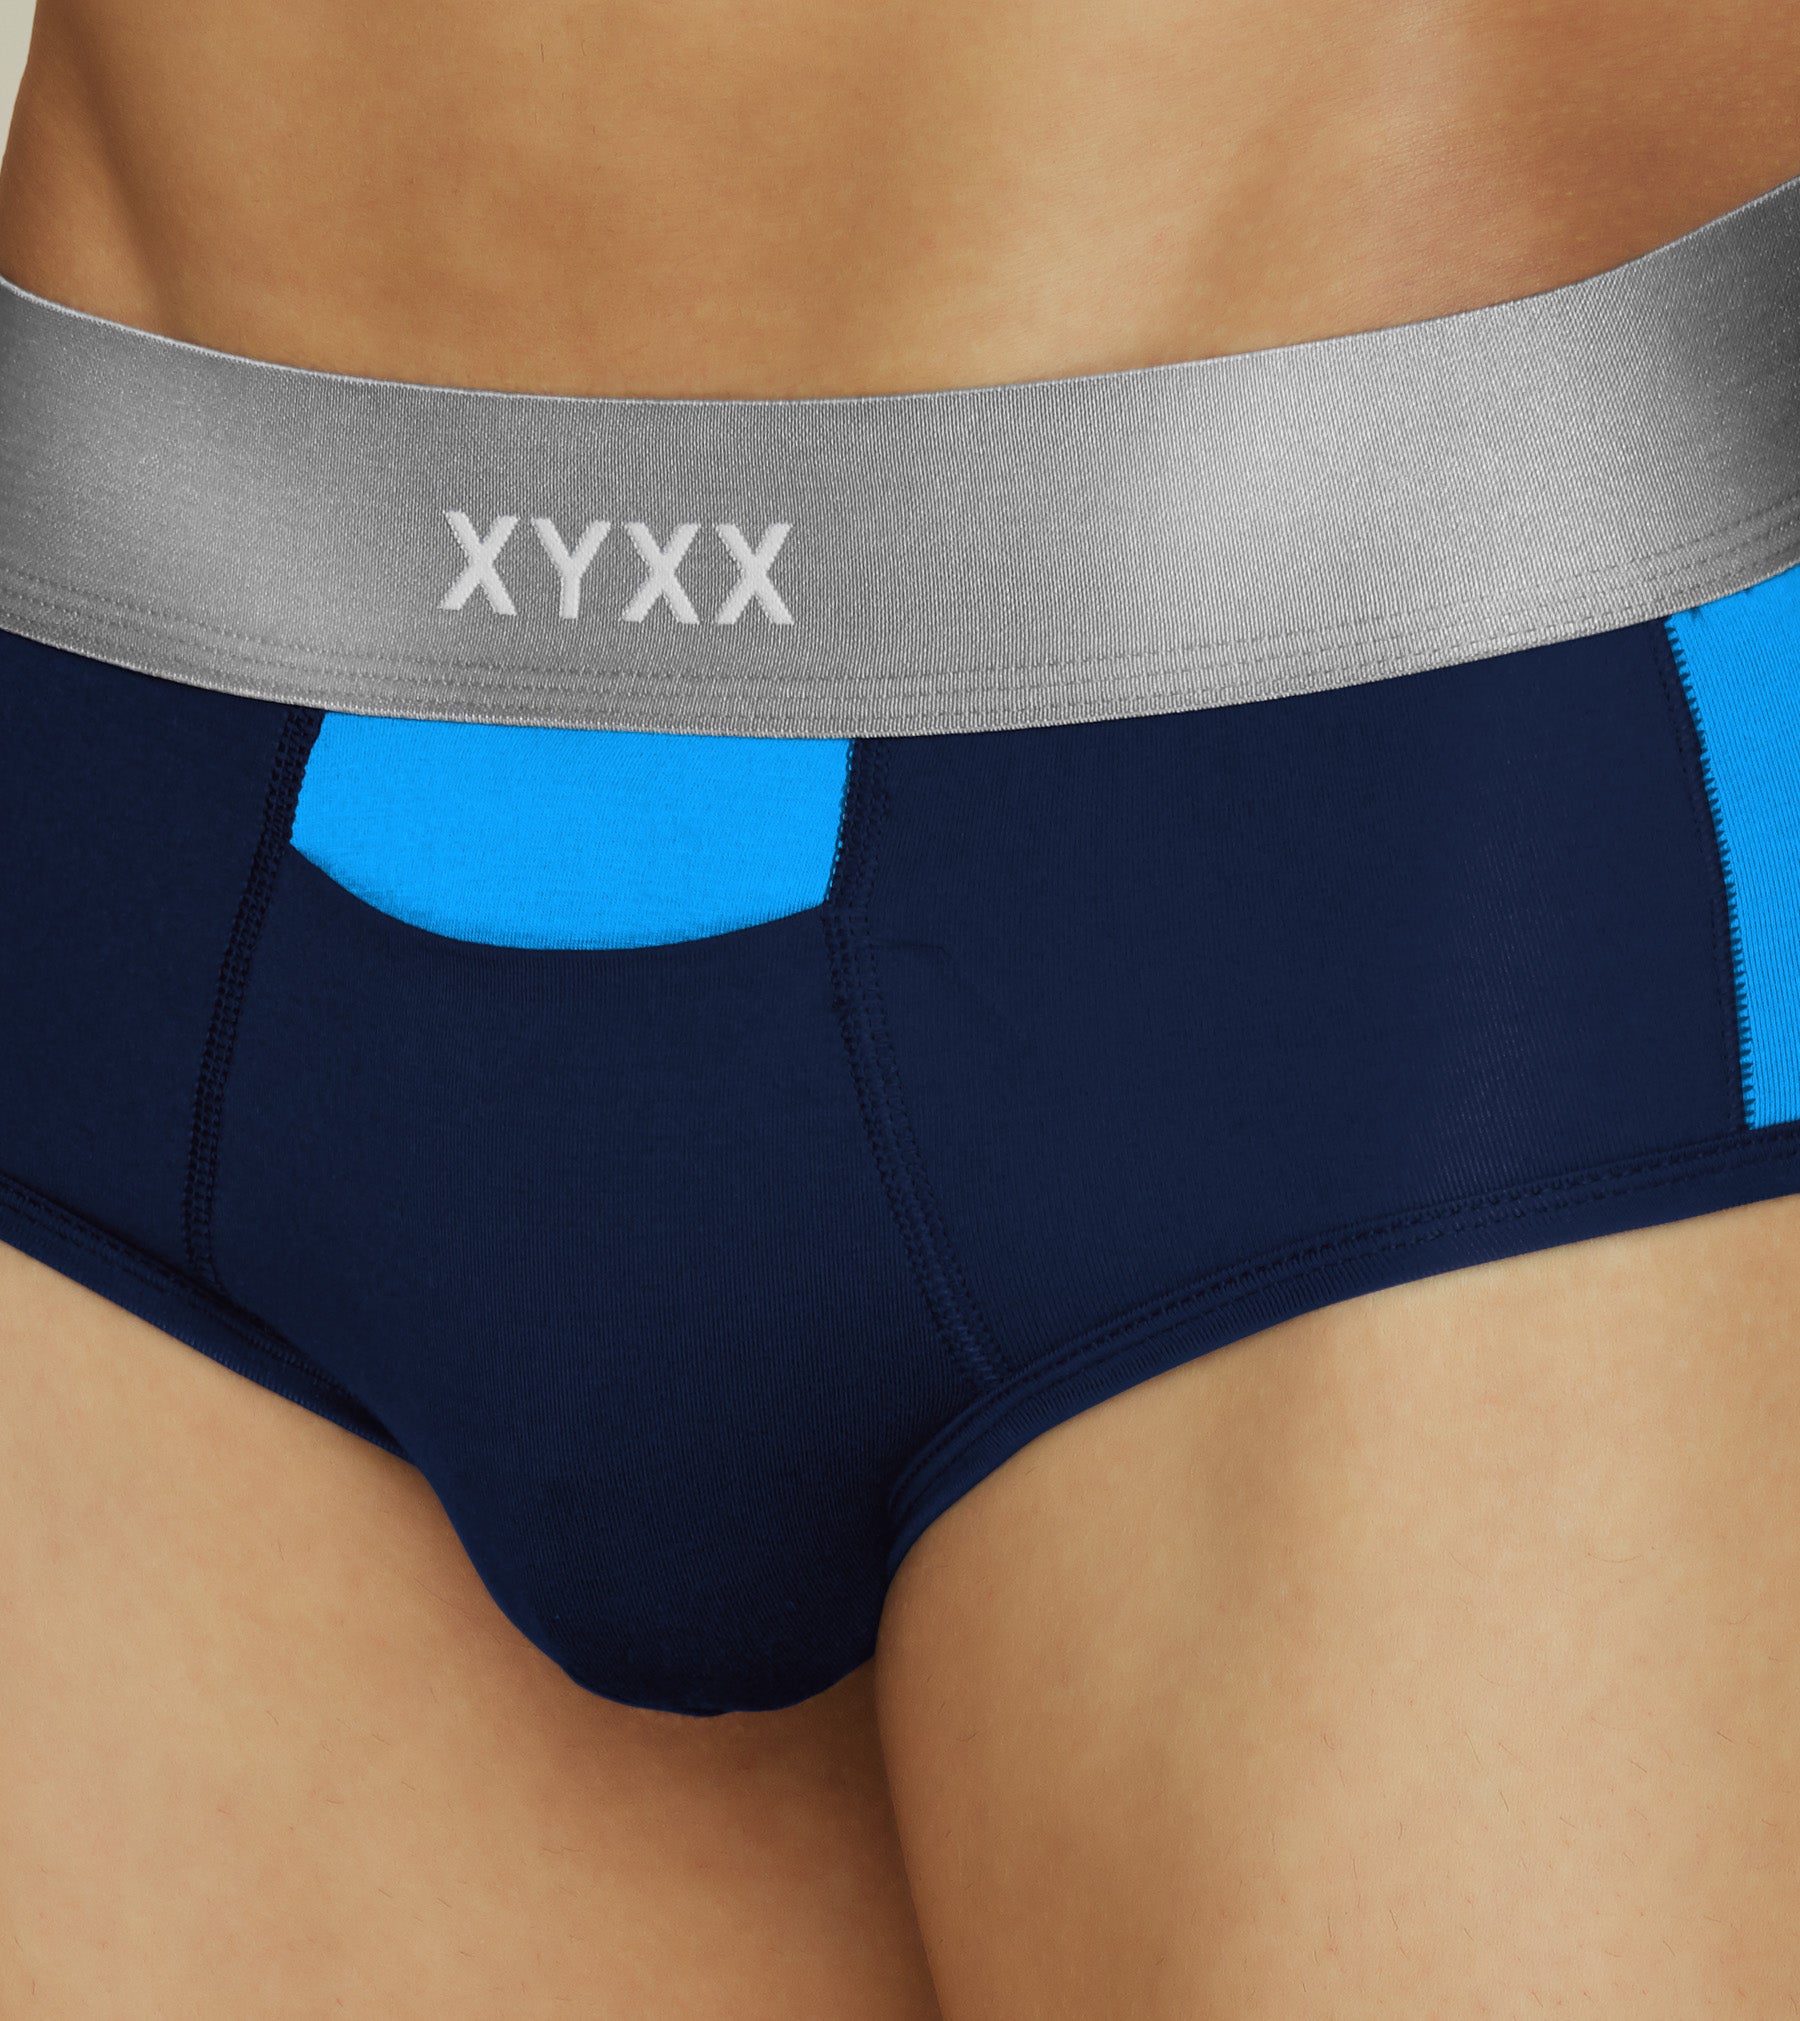 Illuminati Modal Briefs For Men Pack of 3 (Grey, Blue & Red, Blue) -  XYXX Mens Apparels